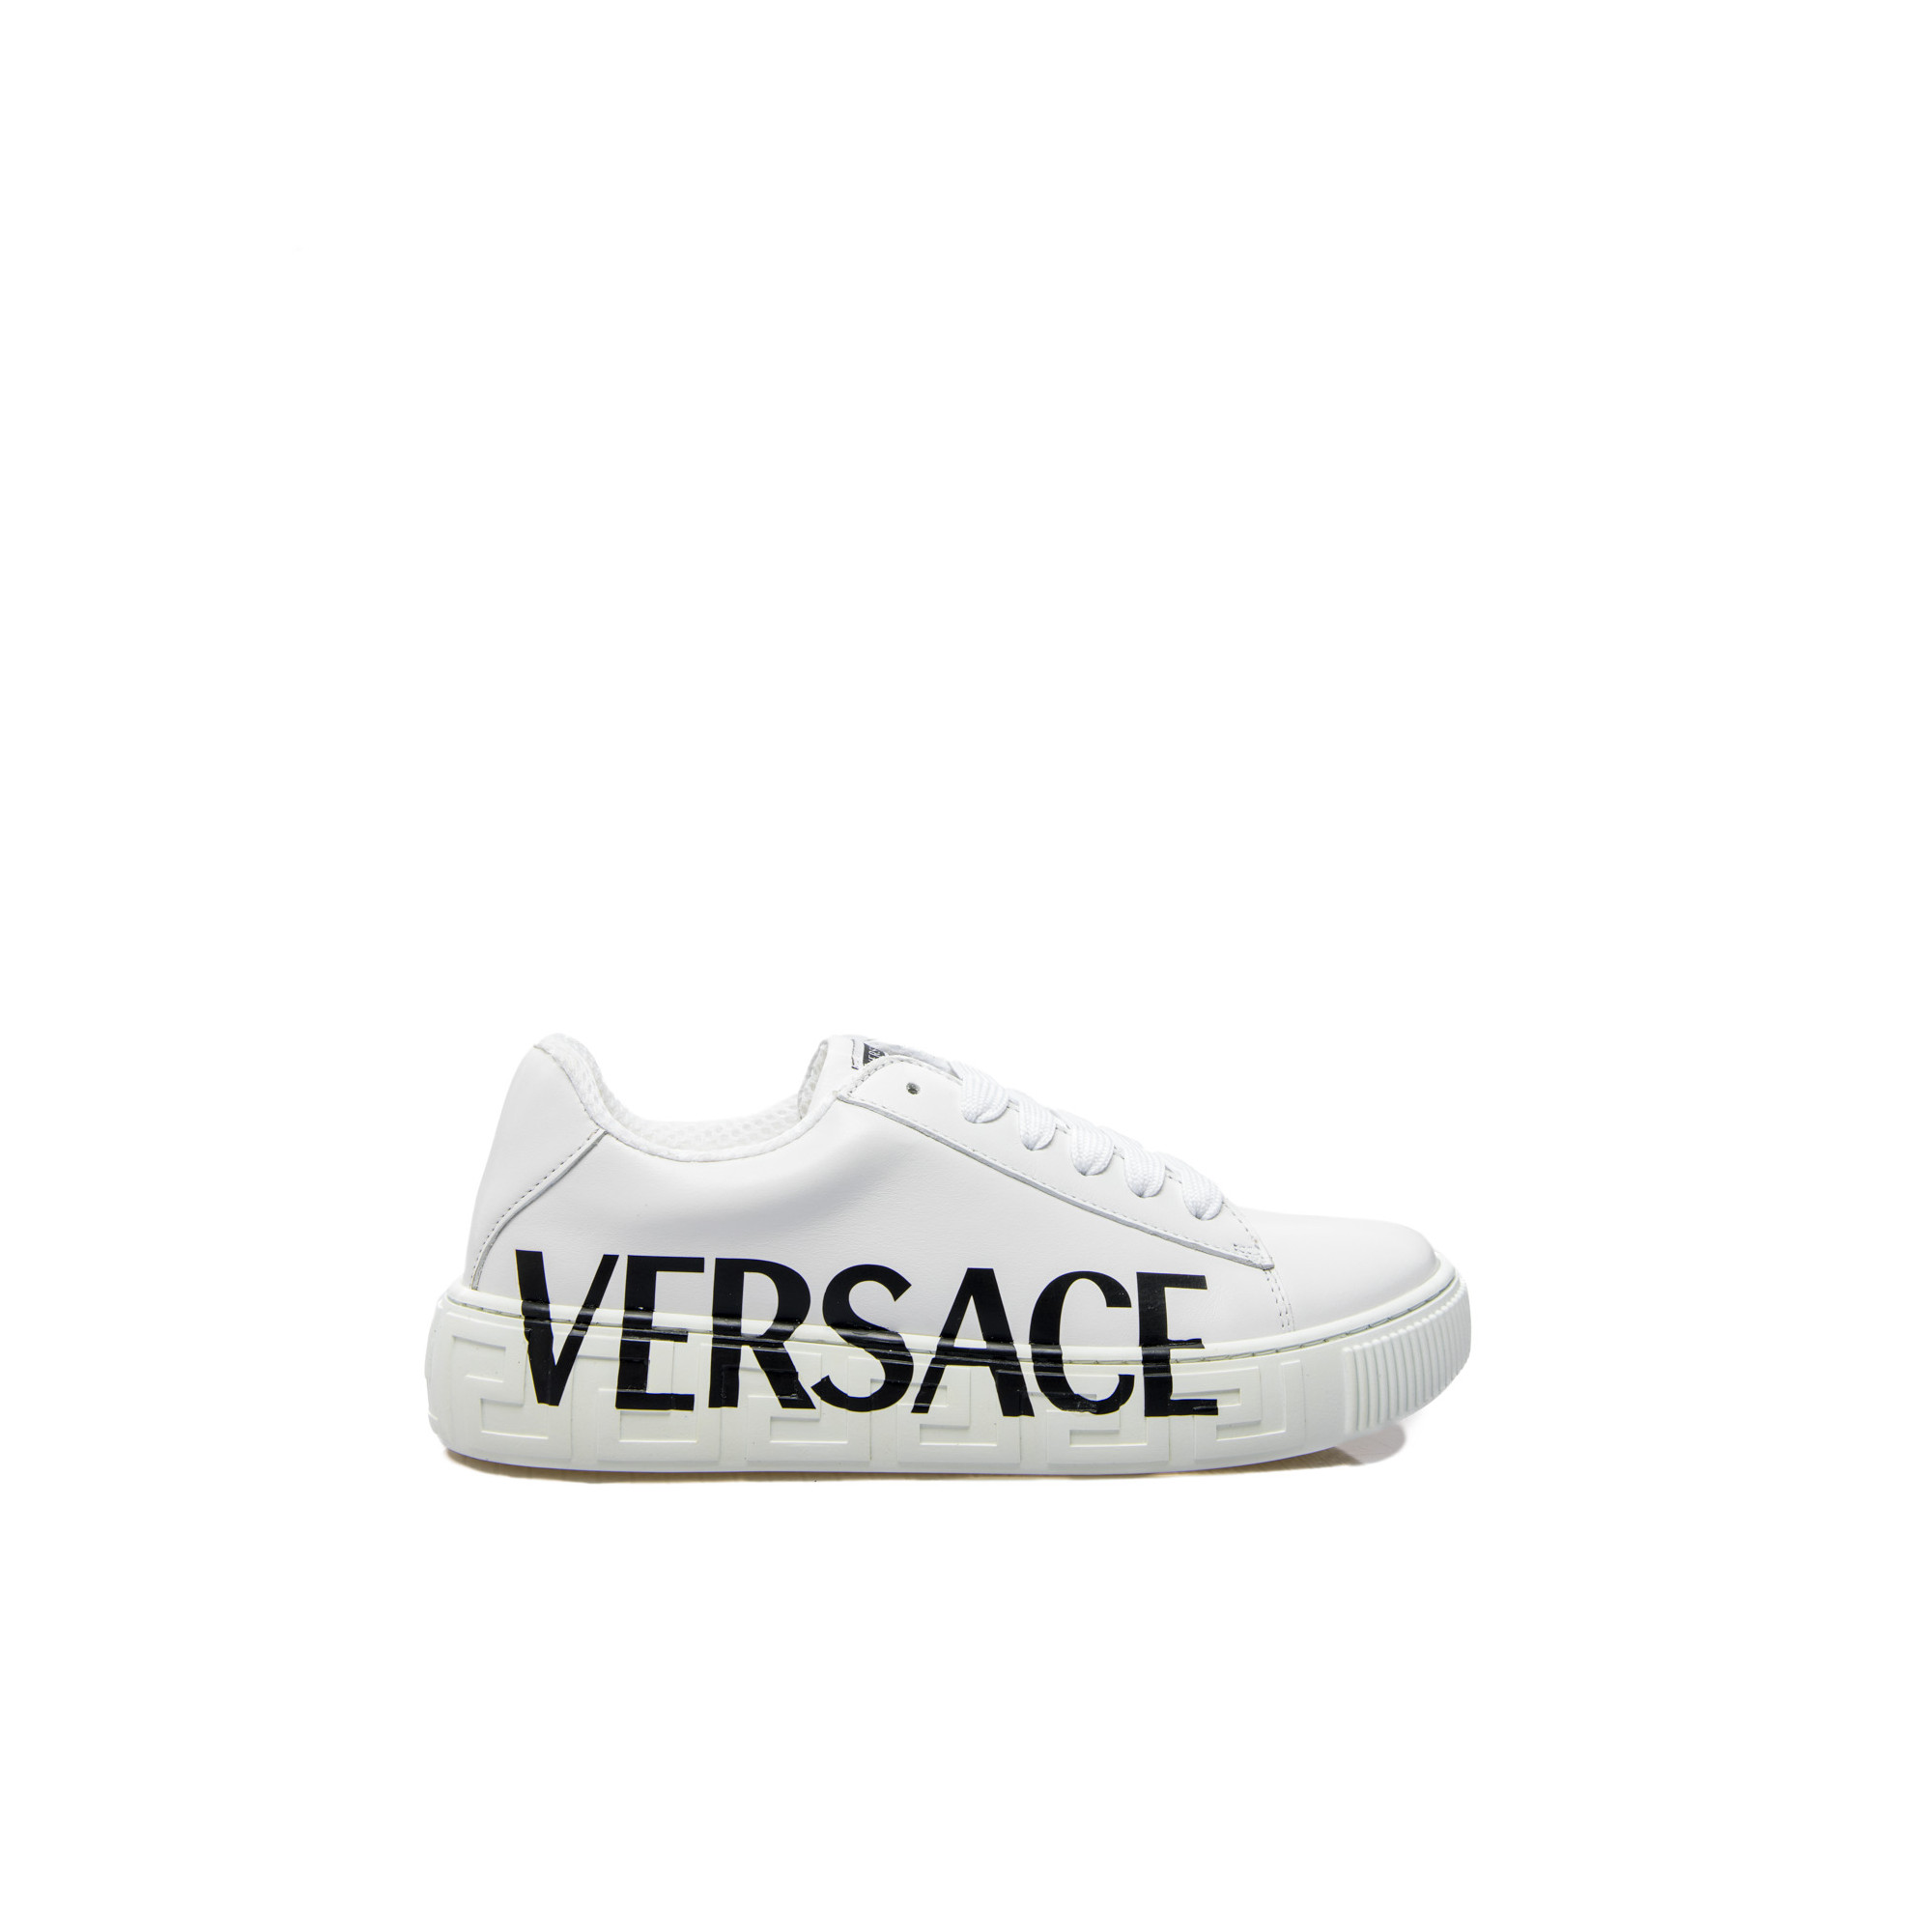 fragment atomair Vulgariteit Versace Sneakers Wit | Derodeloper.com